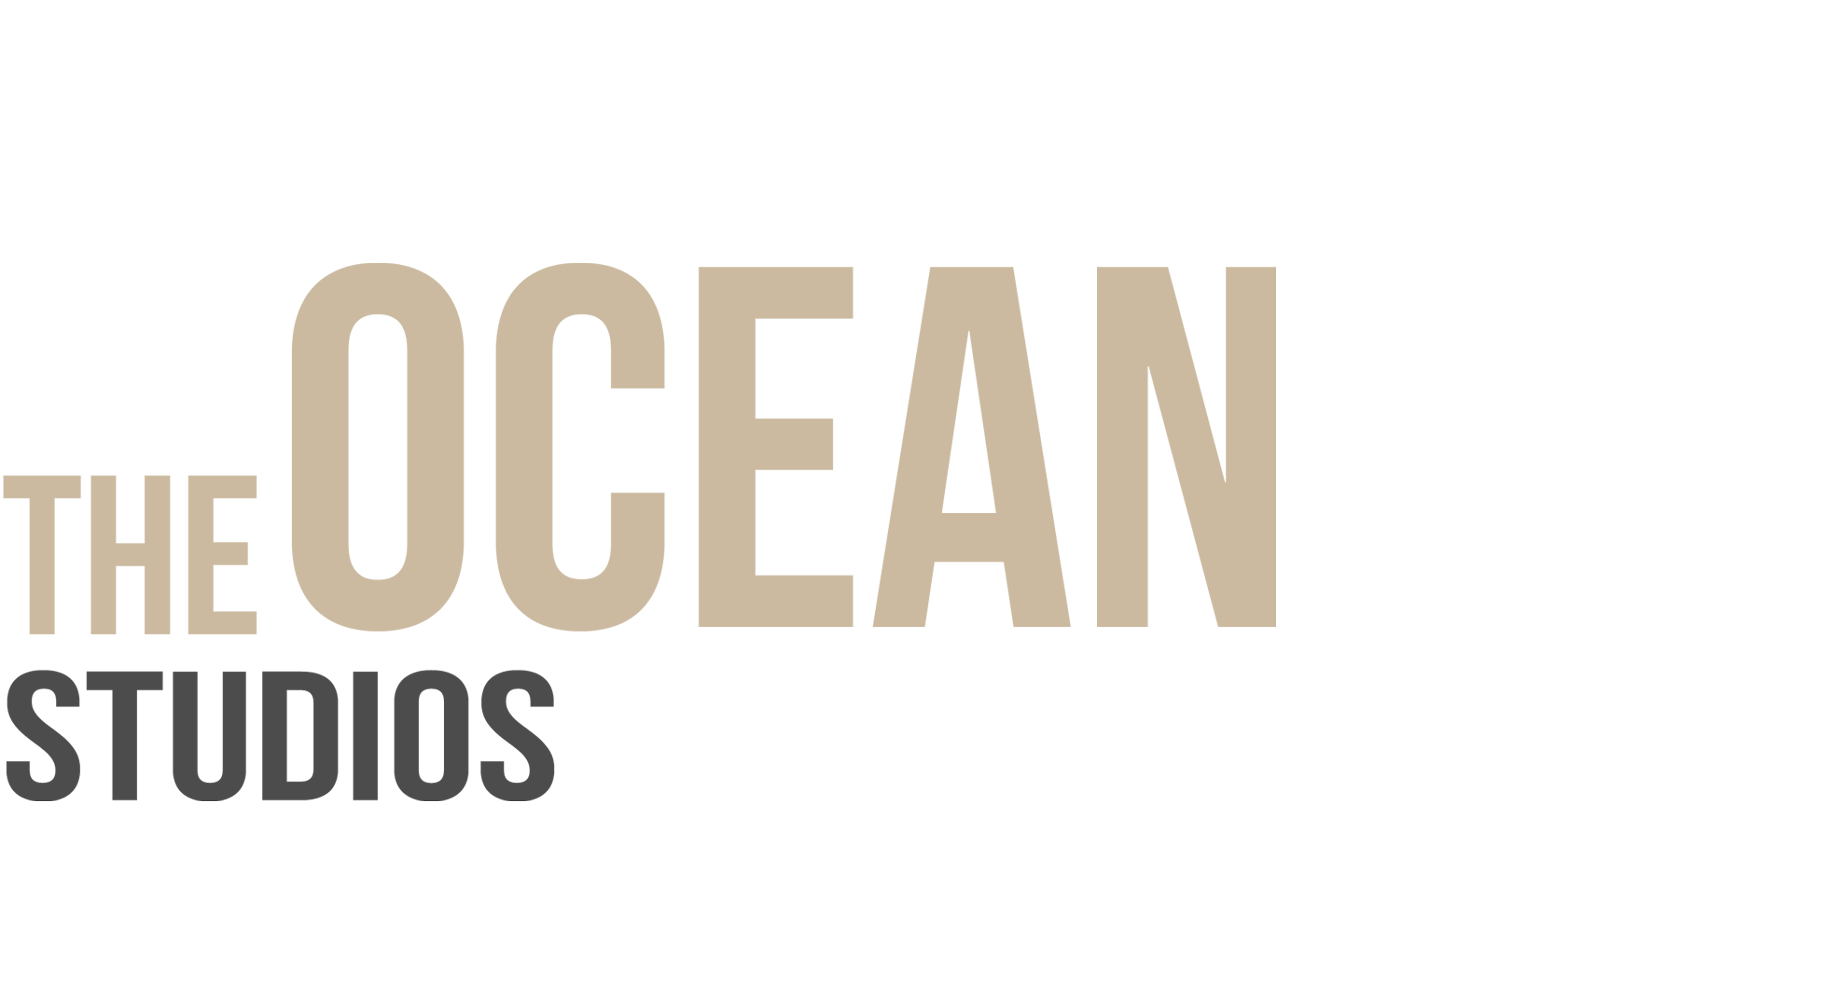 The Ocean Studios